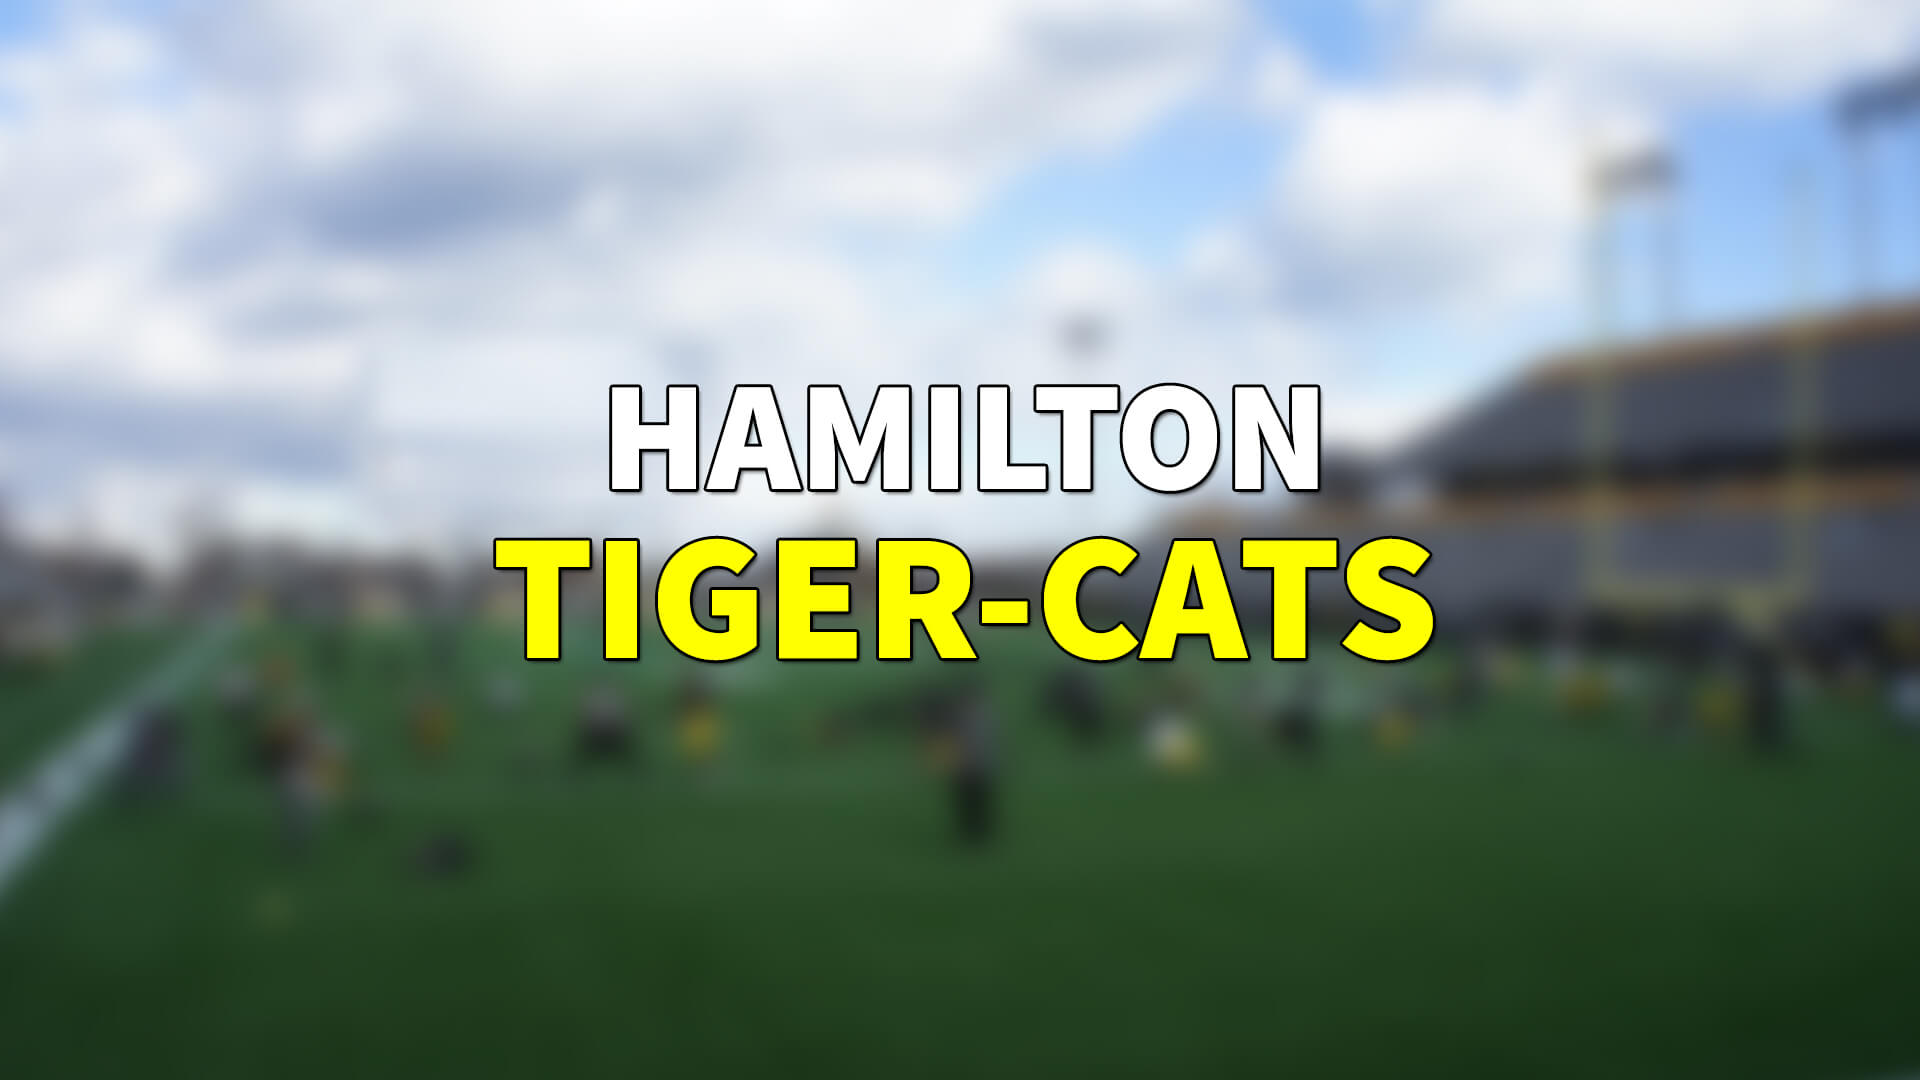 Tiger-Cats 6 Oyuncuyu Kadrosuna Kattı | Korumalı Futbol Türkiye